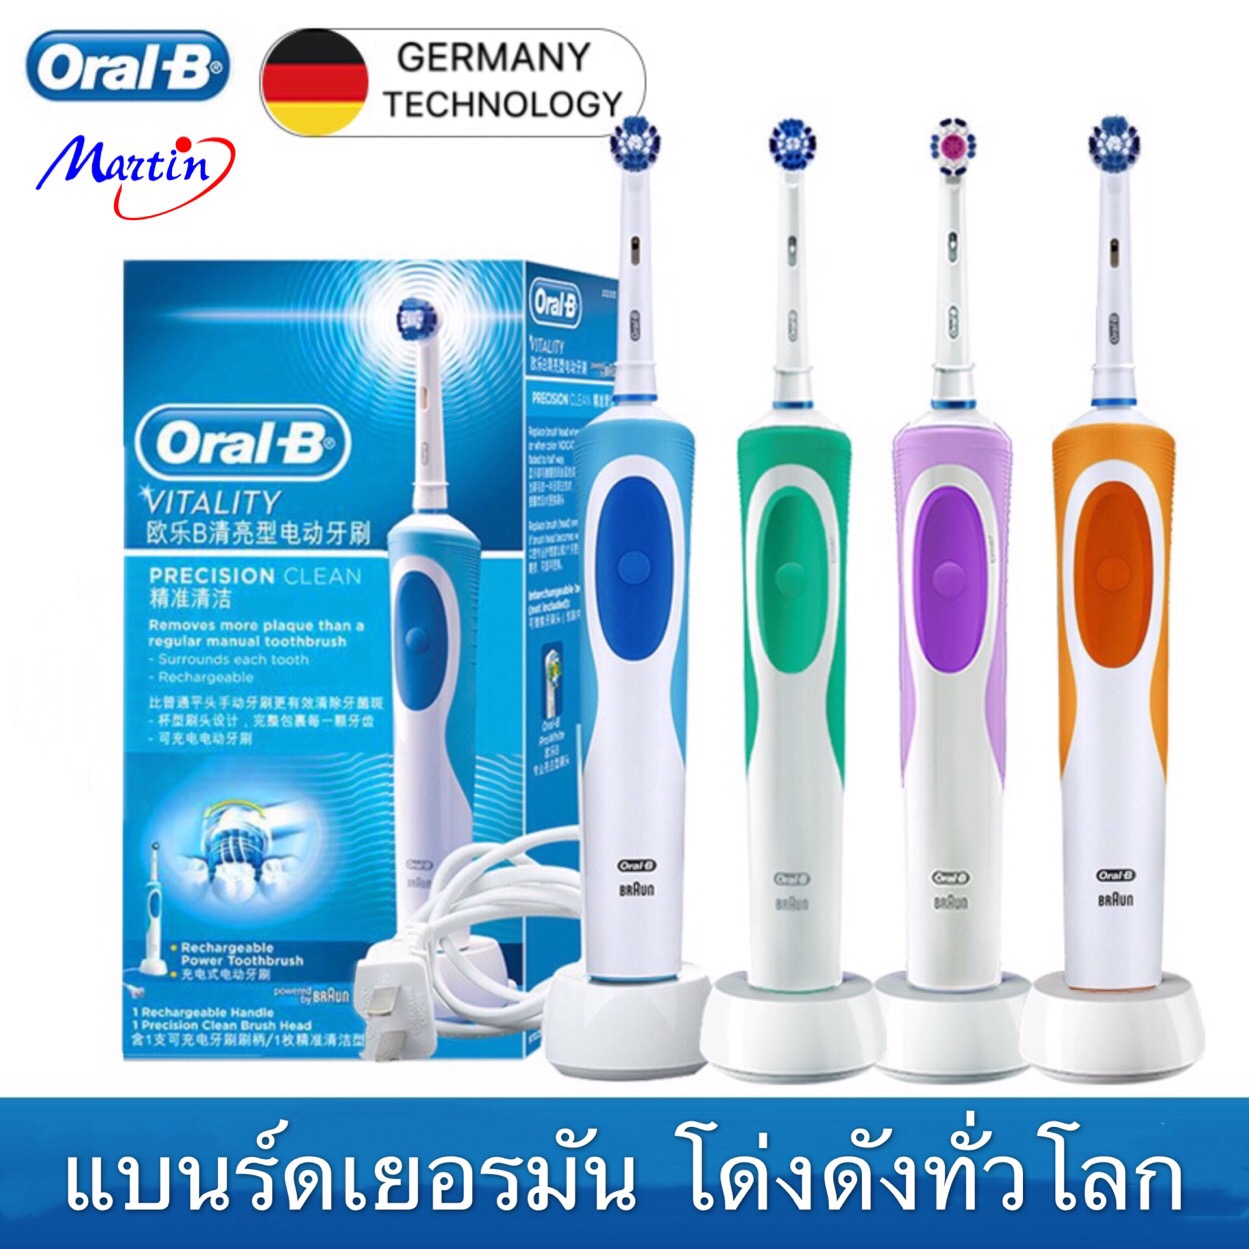 Oral-B แปรงสีฟันไฟฟ้า รุ่น Vitality Precision cleanฟรีหัวแปรงสีฟัน 4 หัว